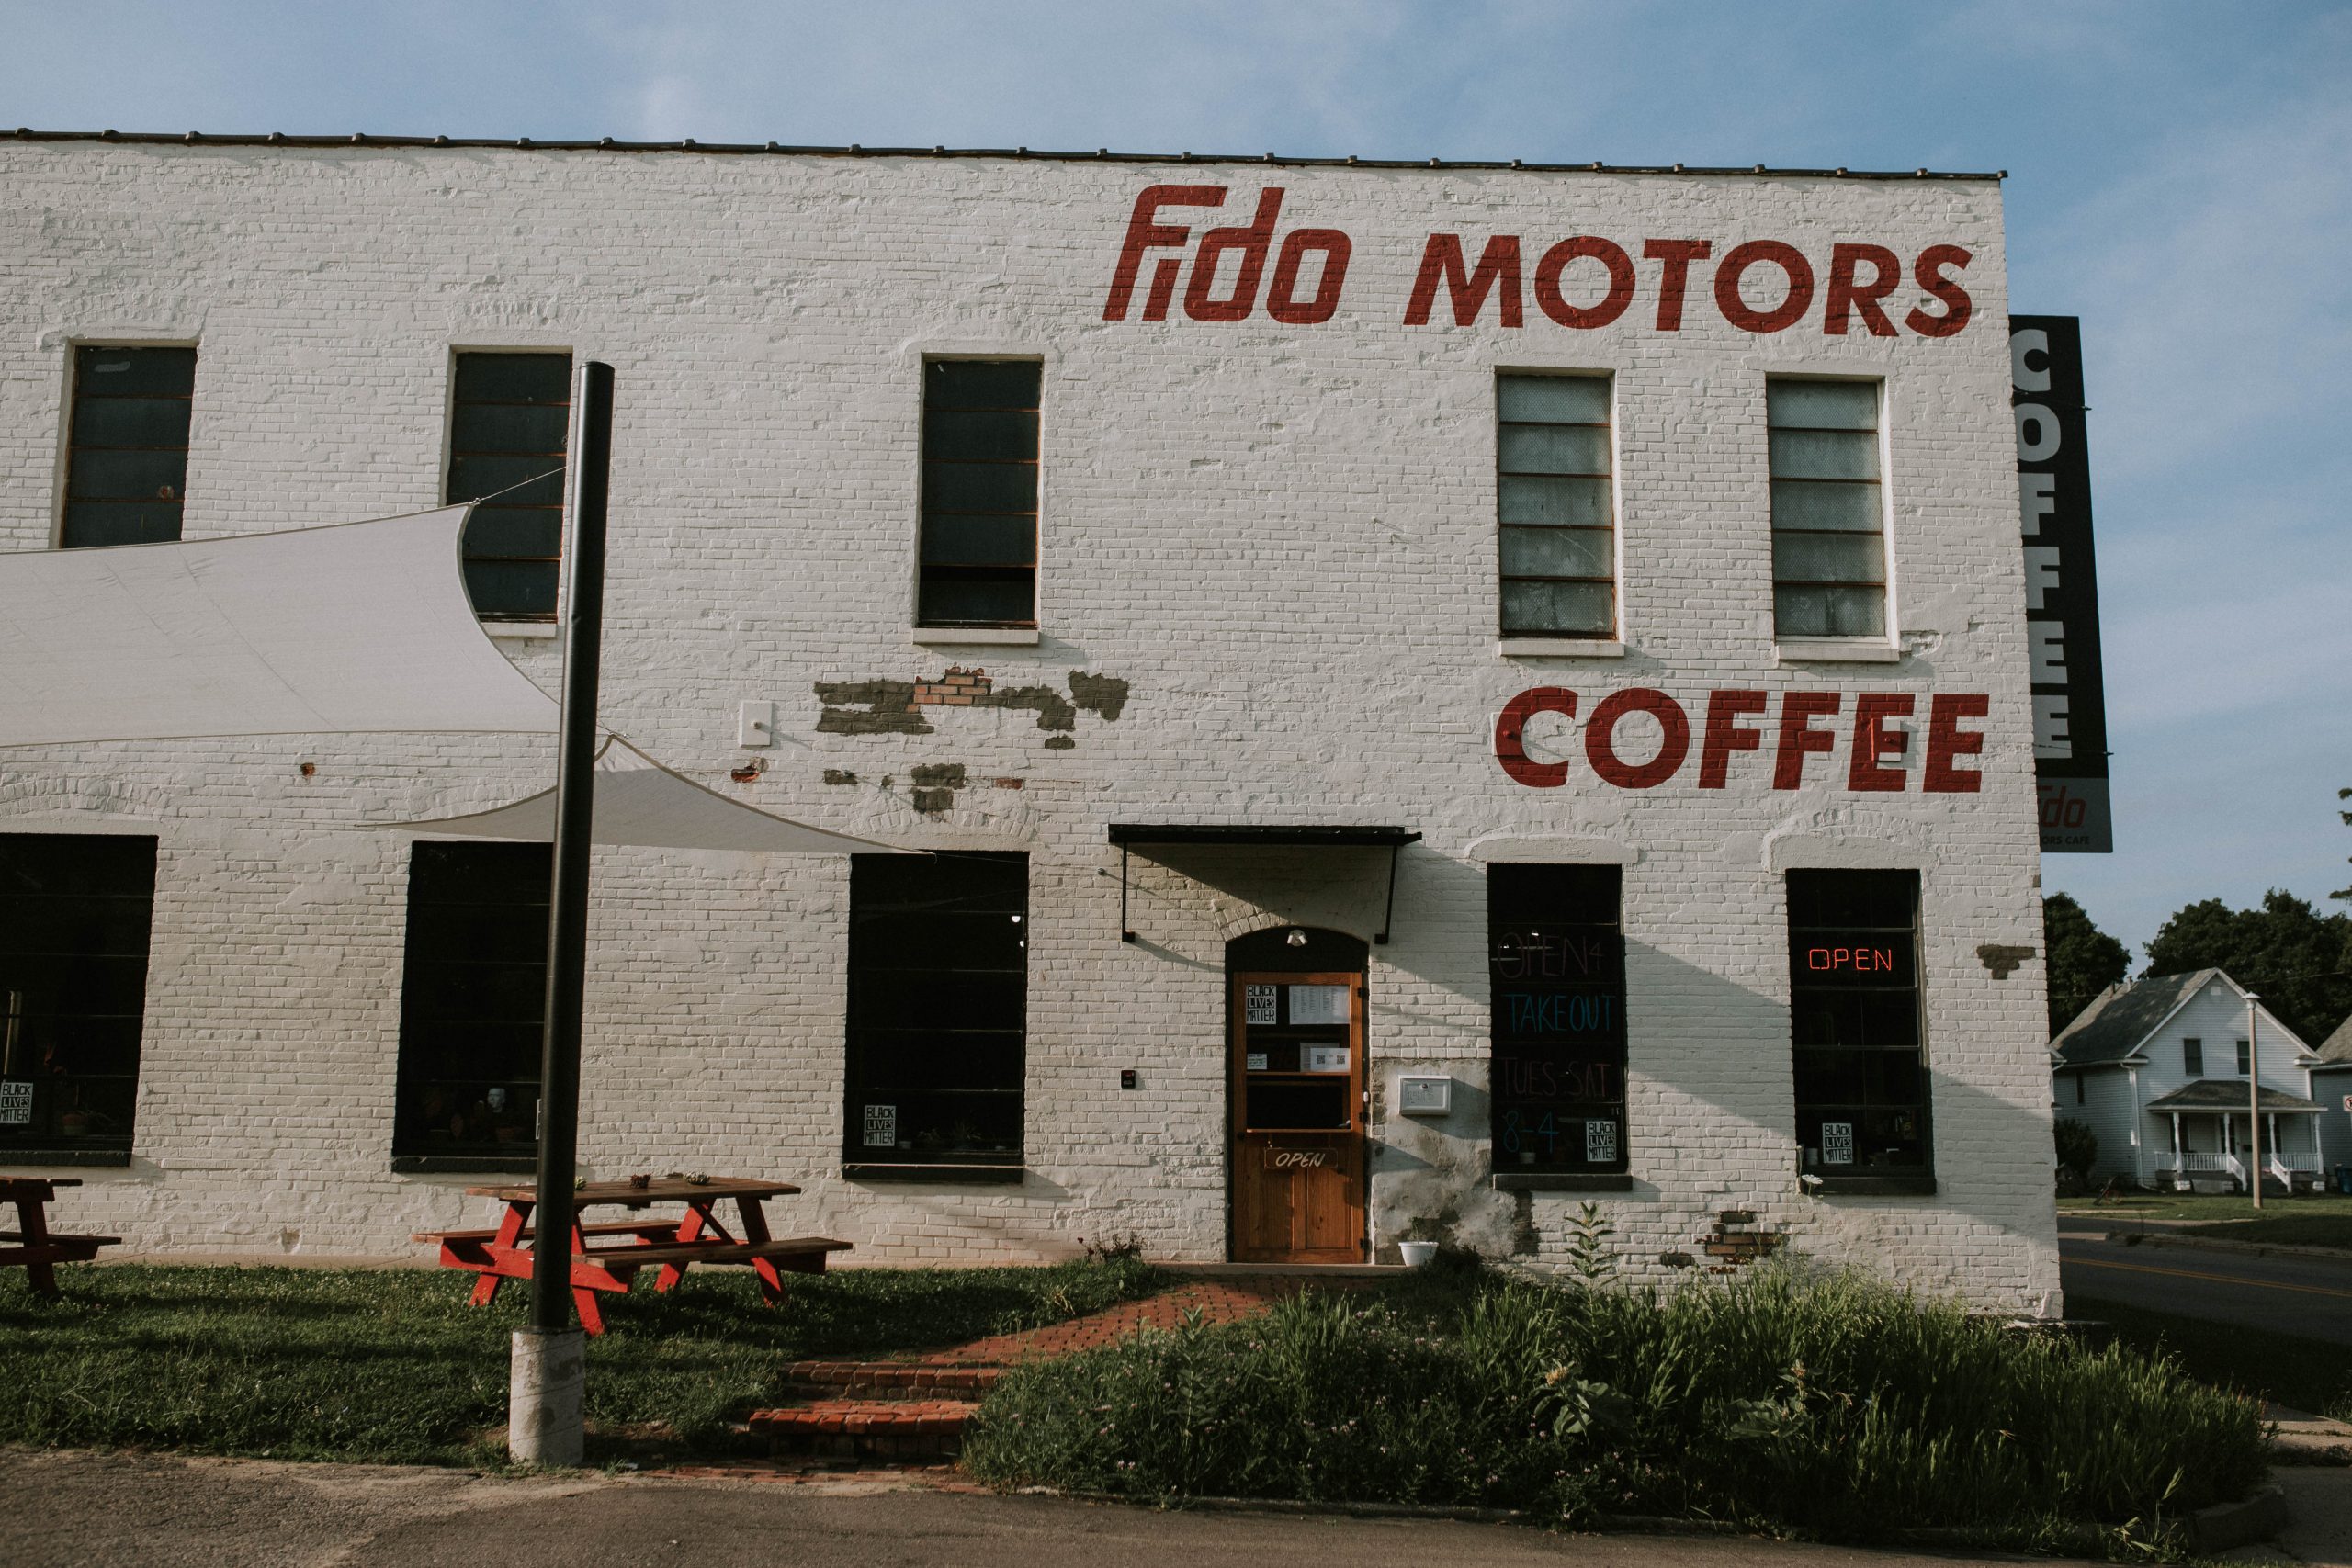 Fido motors Coffee Kalamazoo Michigan